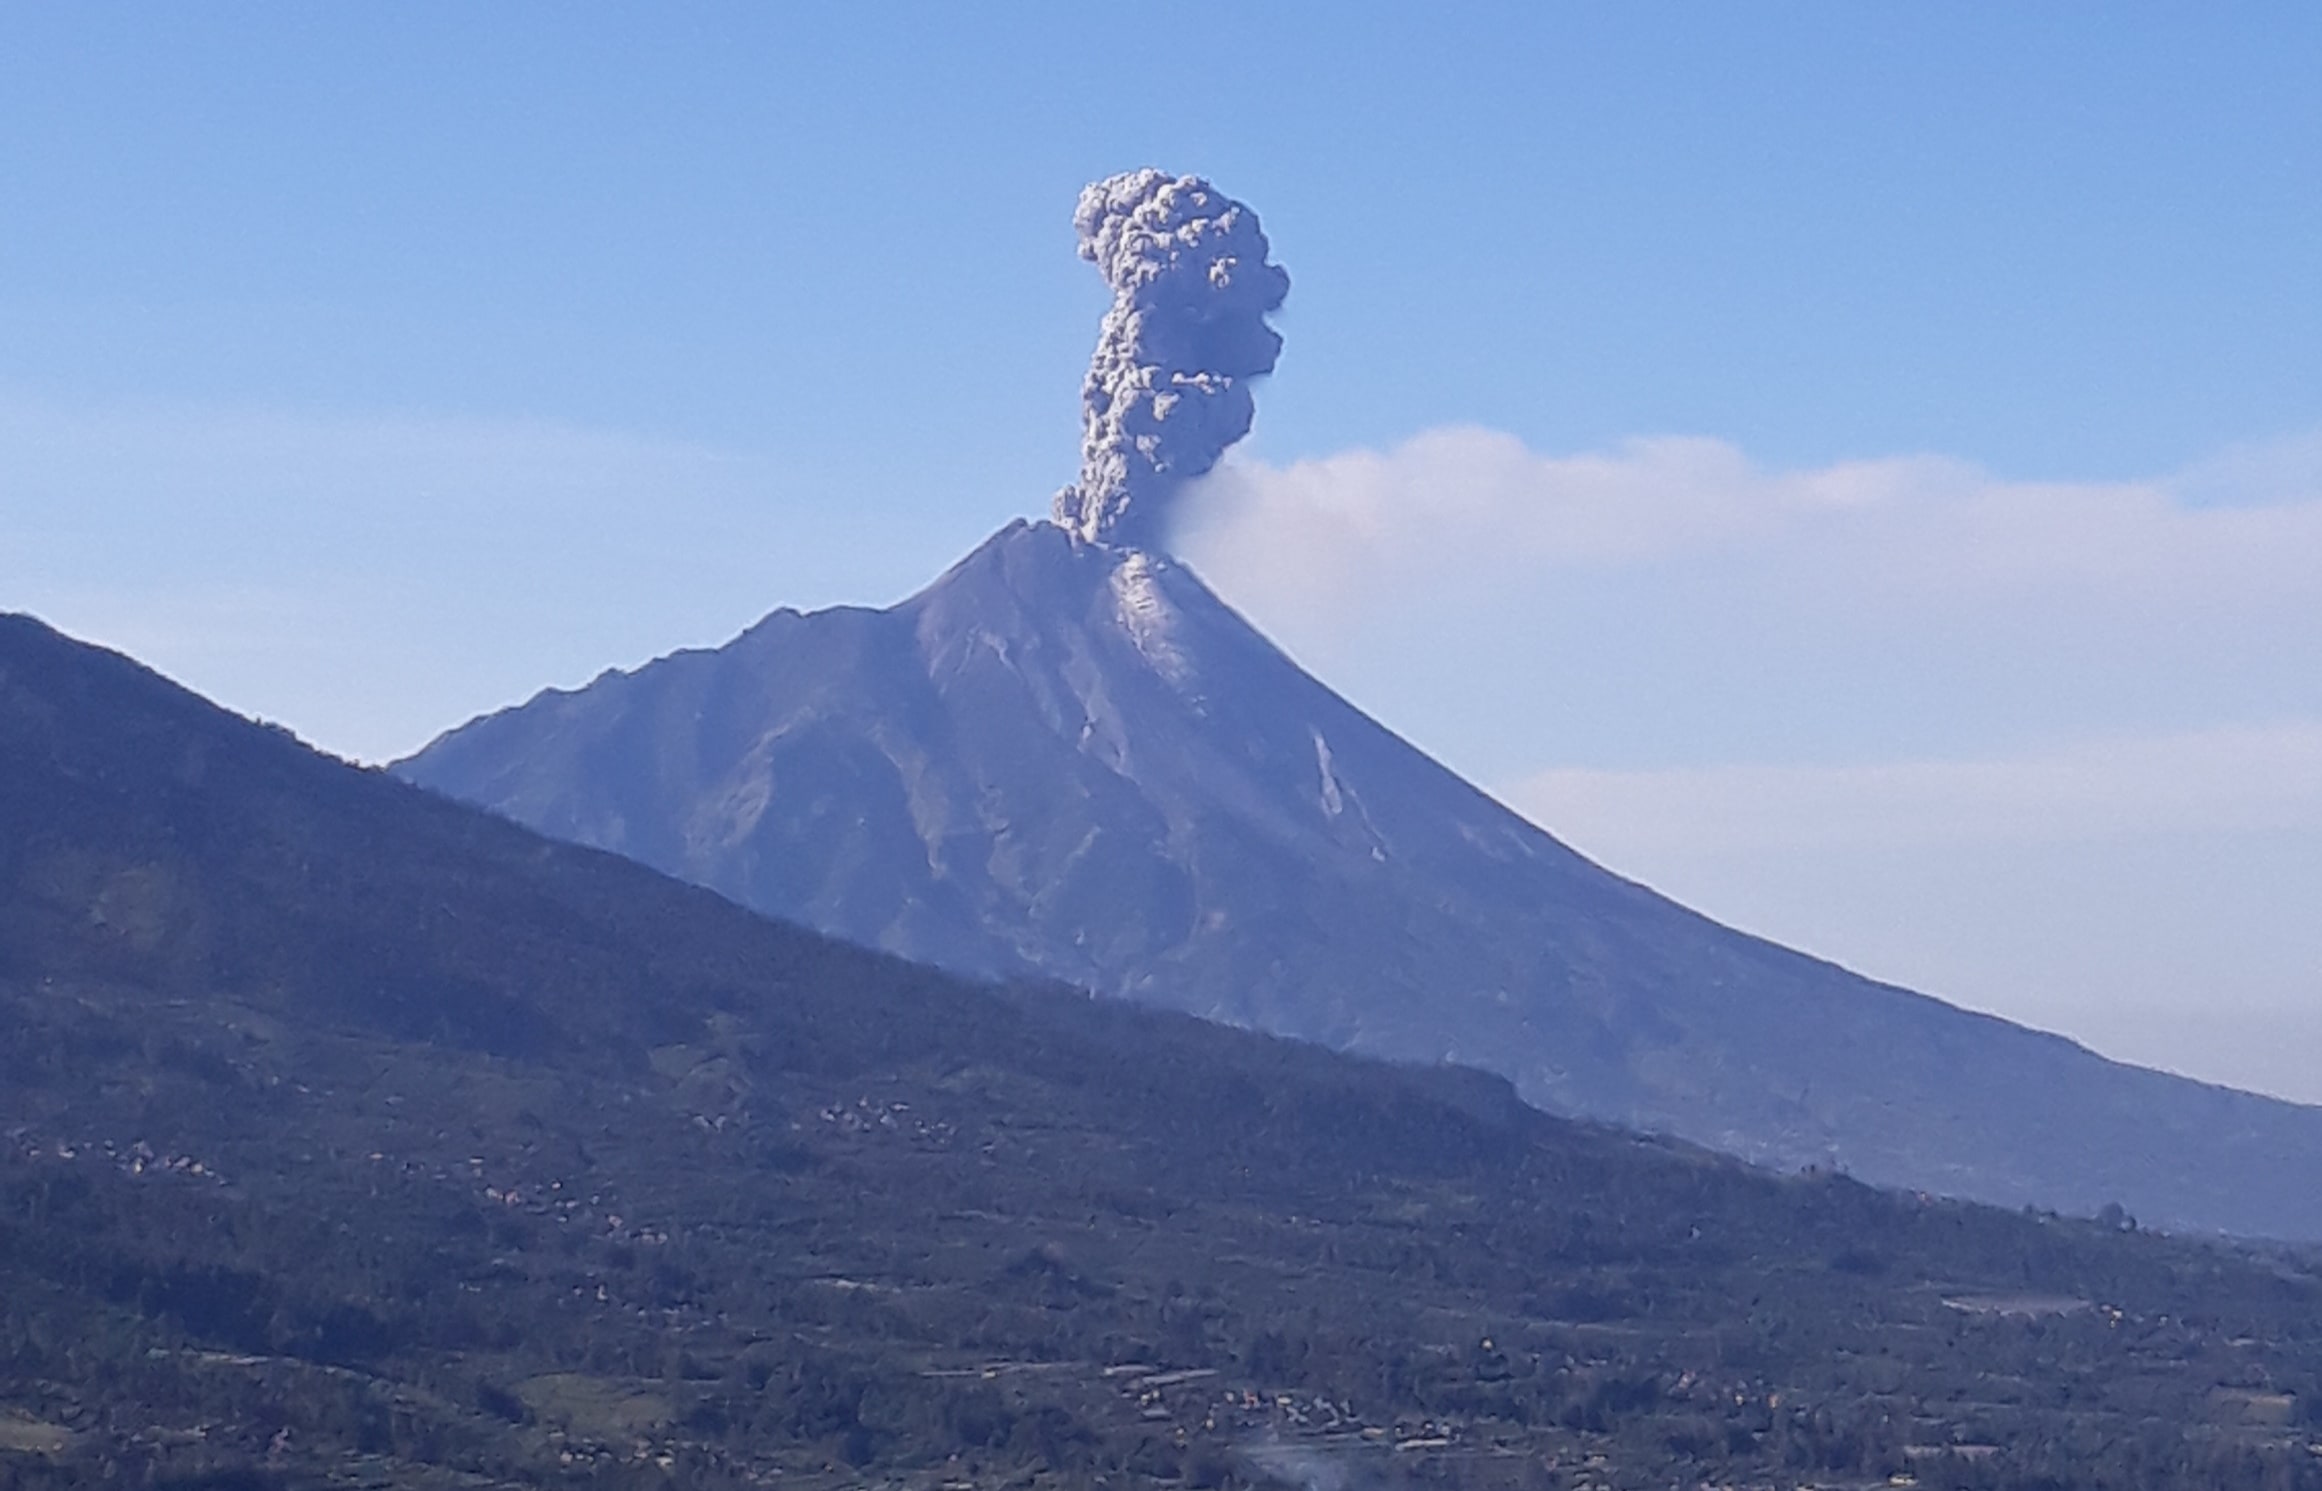 Mount Merapi spews ash following an eruption on May 11, 2018 in Yogyakarta, Indonesia.